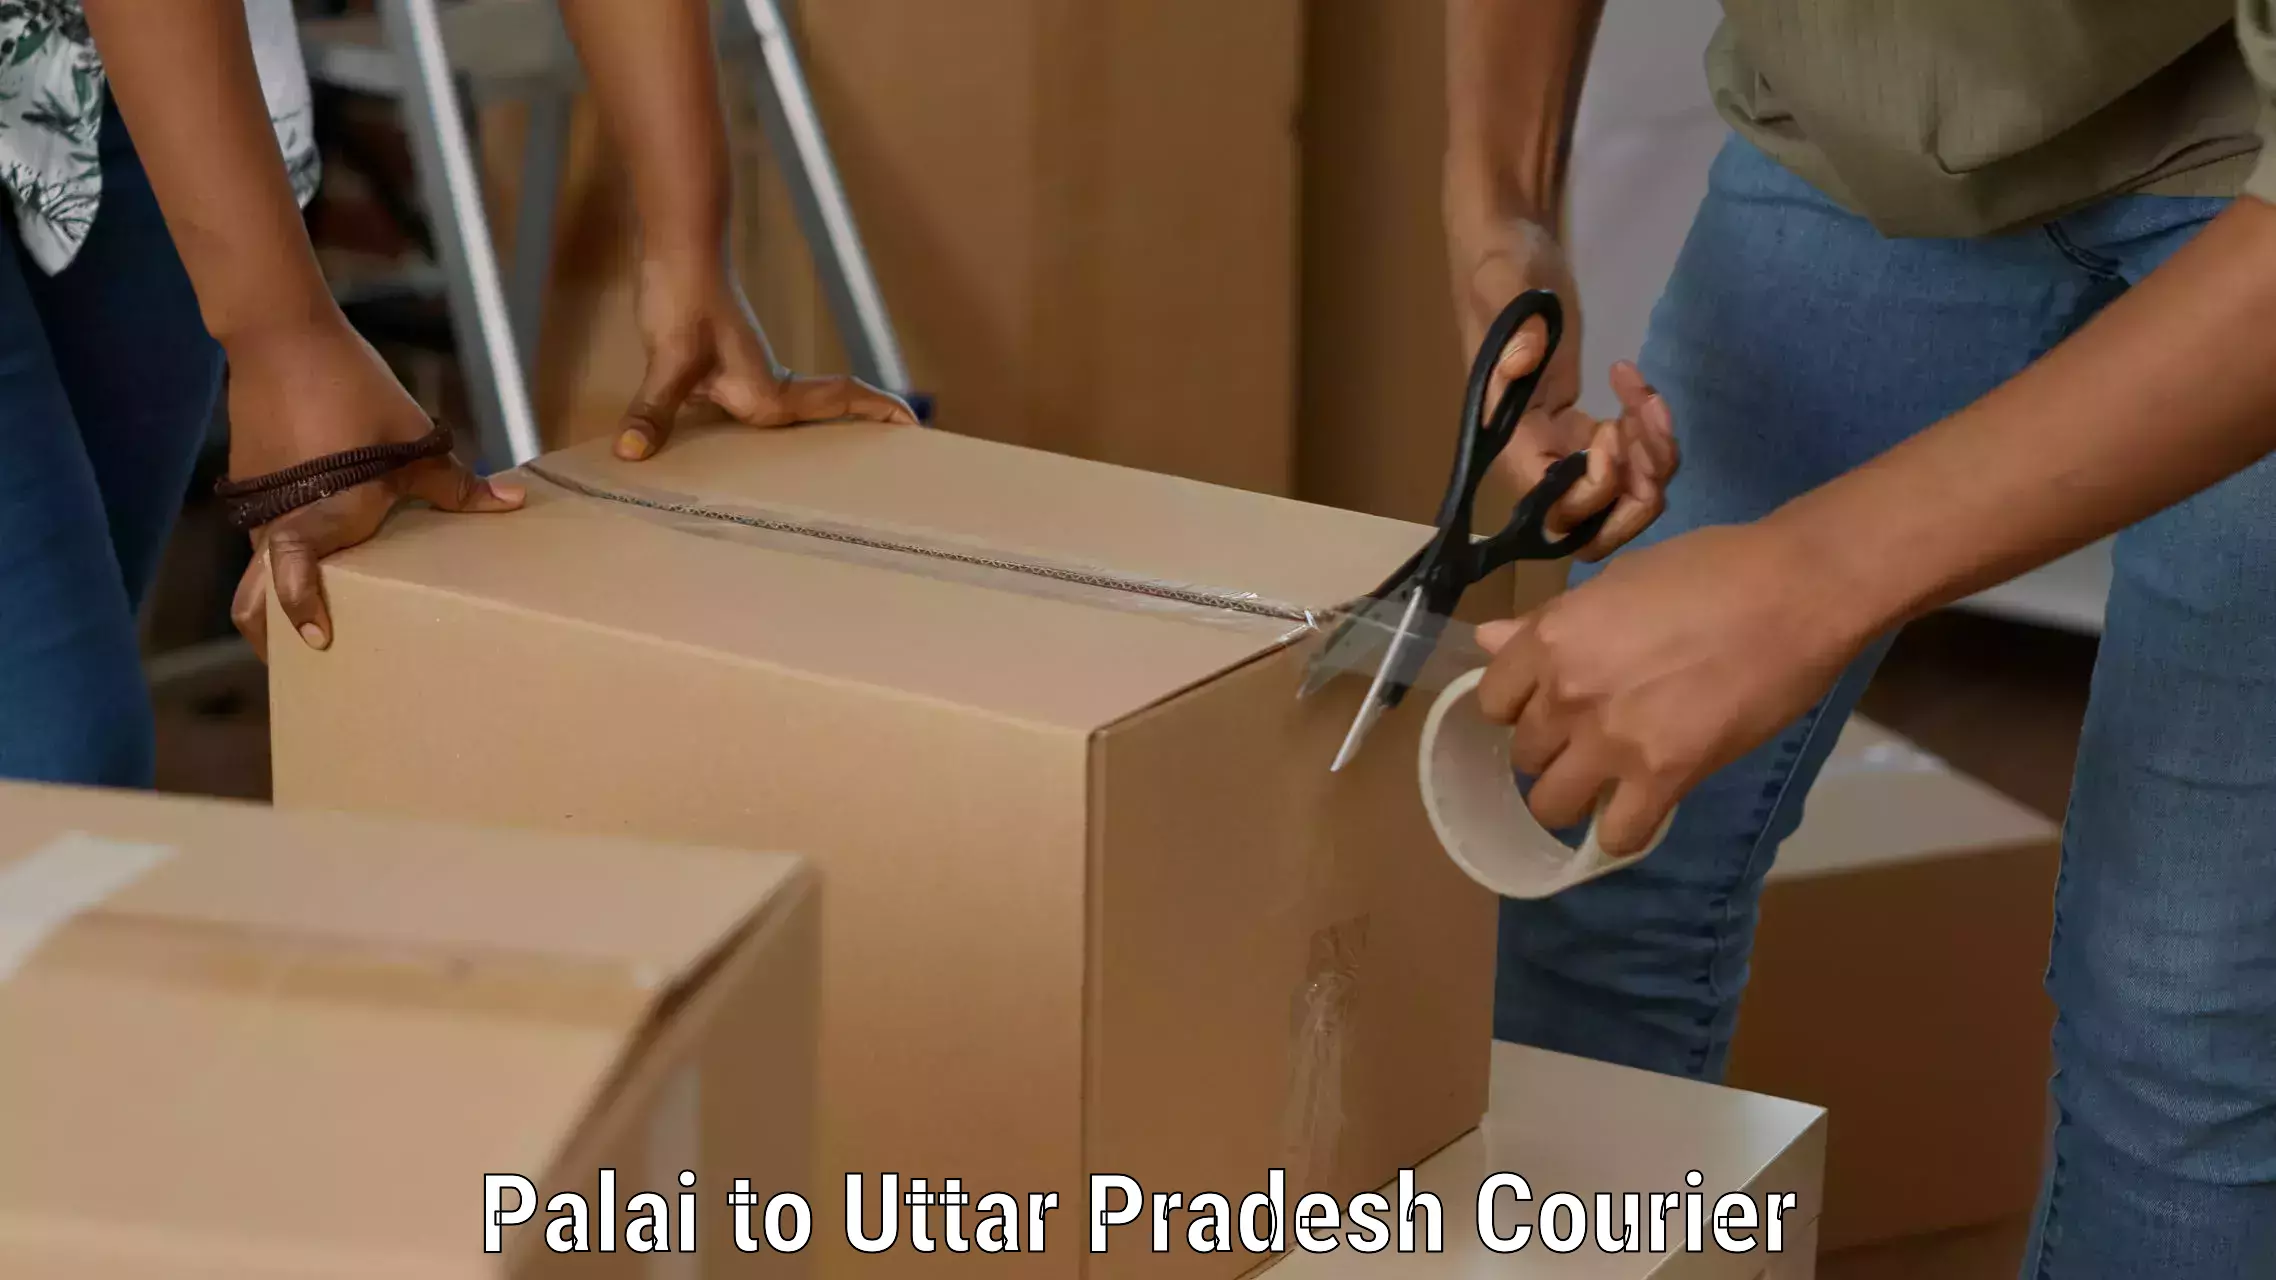 Comprehensive logistics Palai to Rath